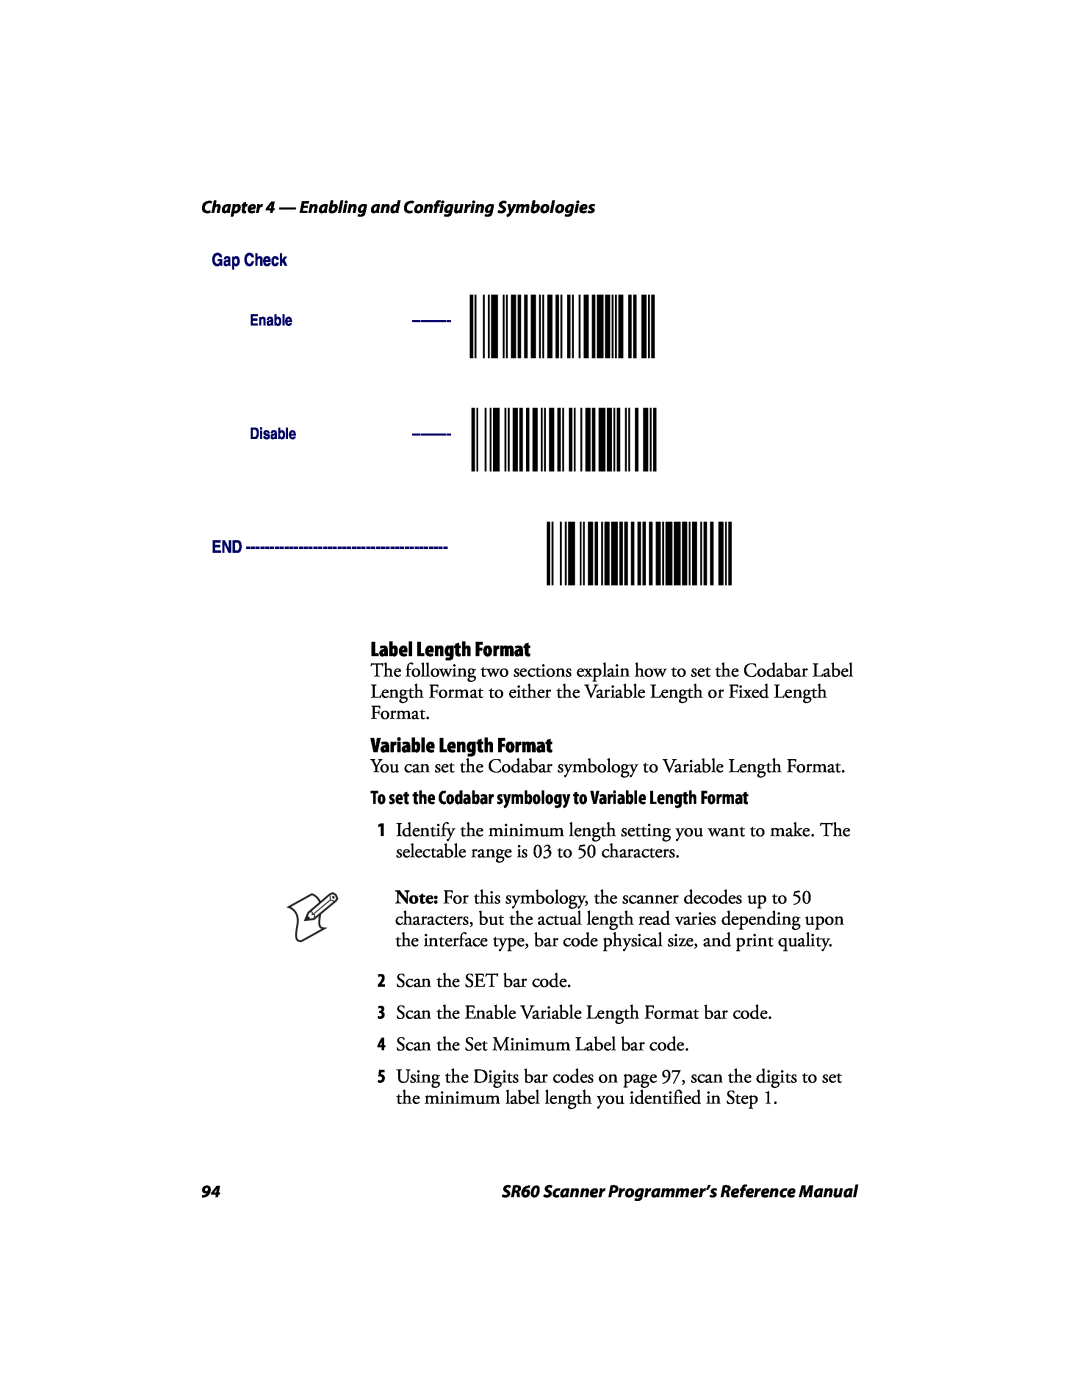 Intermec SR60 manual To set the Codabar symbology to Variable Length Format, Label Length Format 